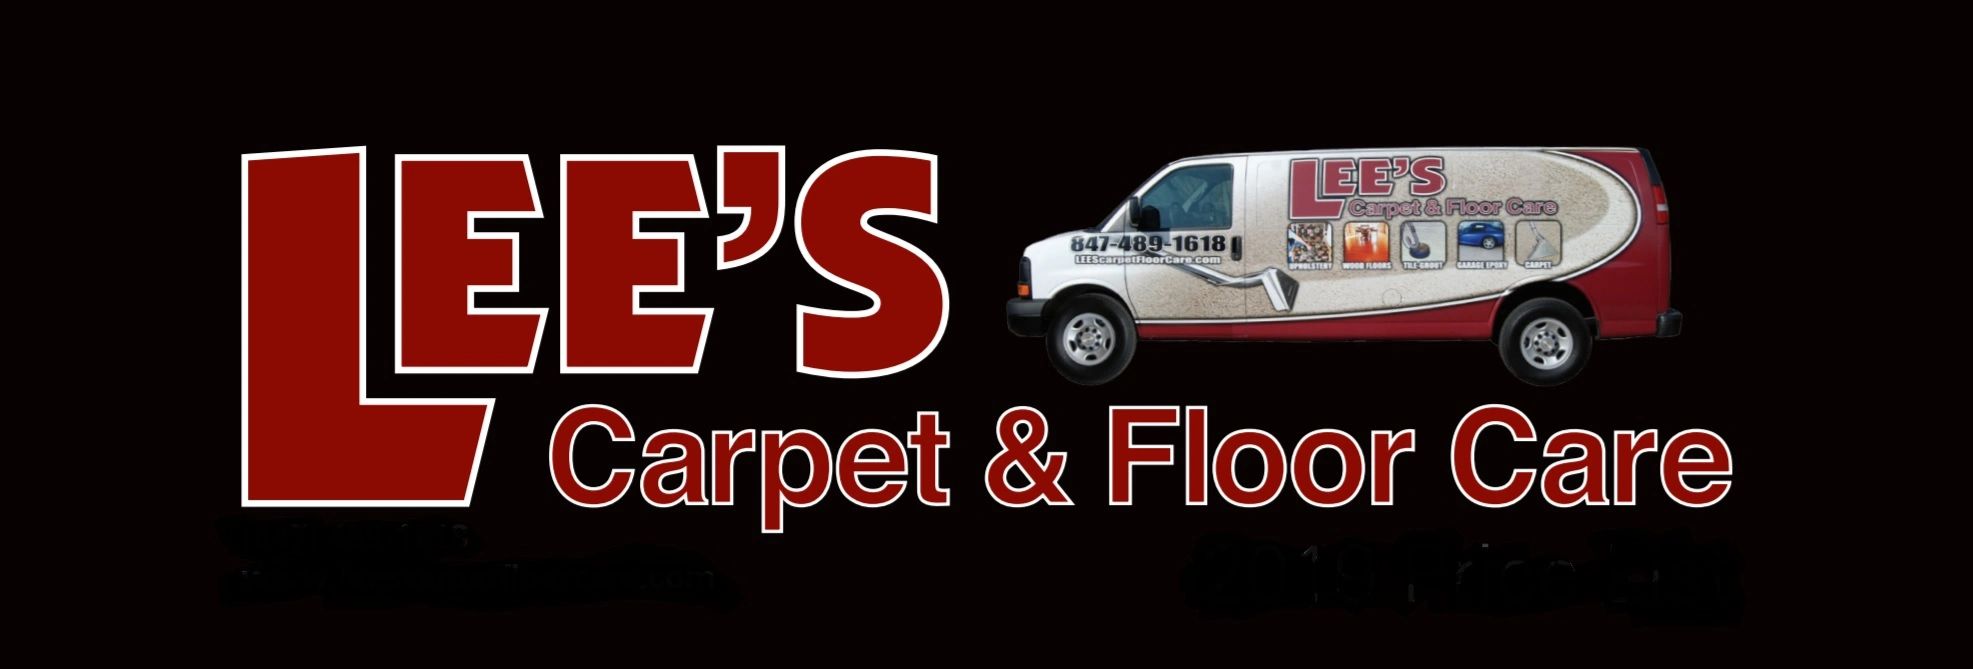 Lee's Carpet and Floor Care - Carpet Cleaning, Expoxy Garage Floor